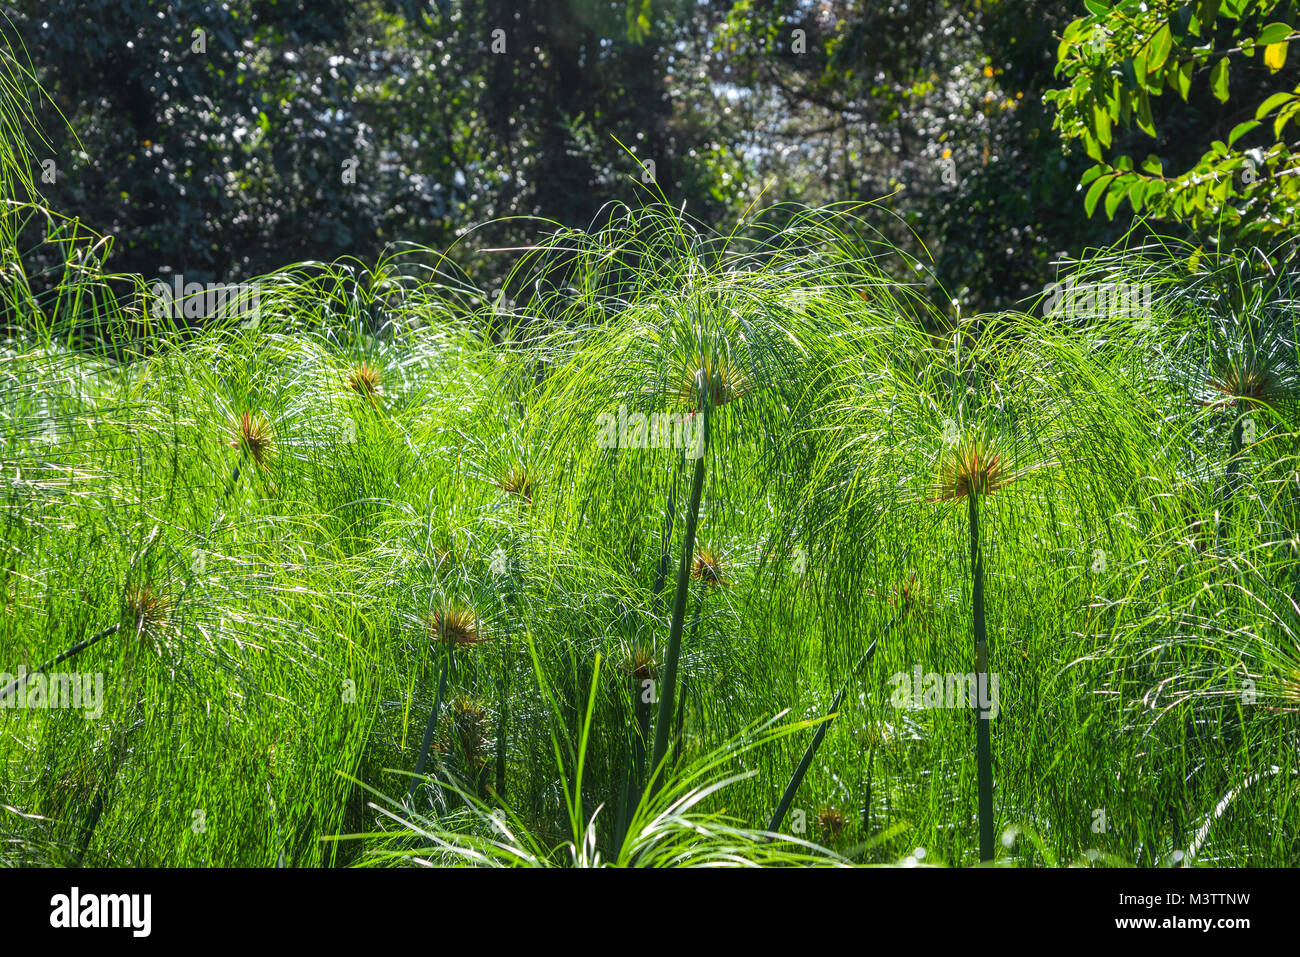 Nature scenes in a North Florida garden setting. Stock Photo